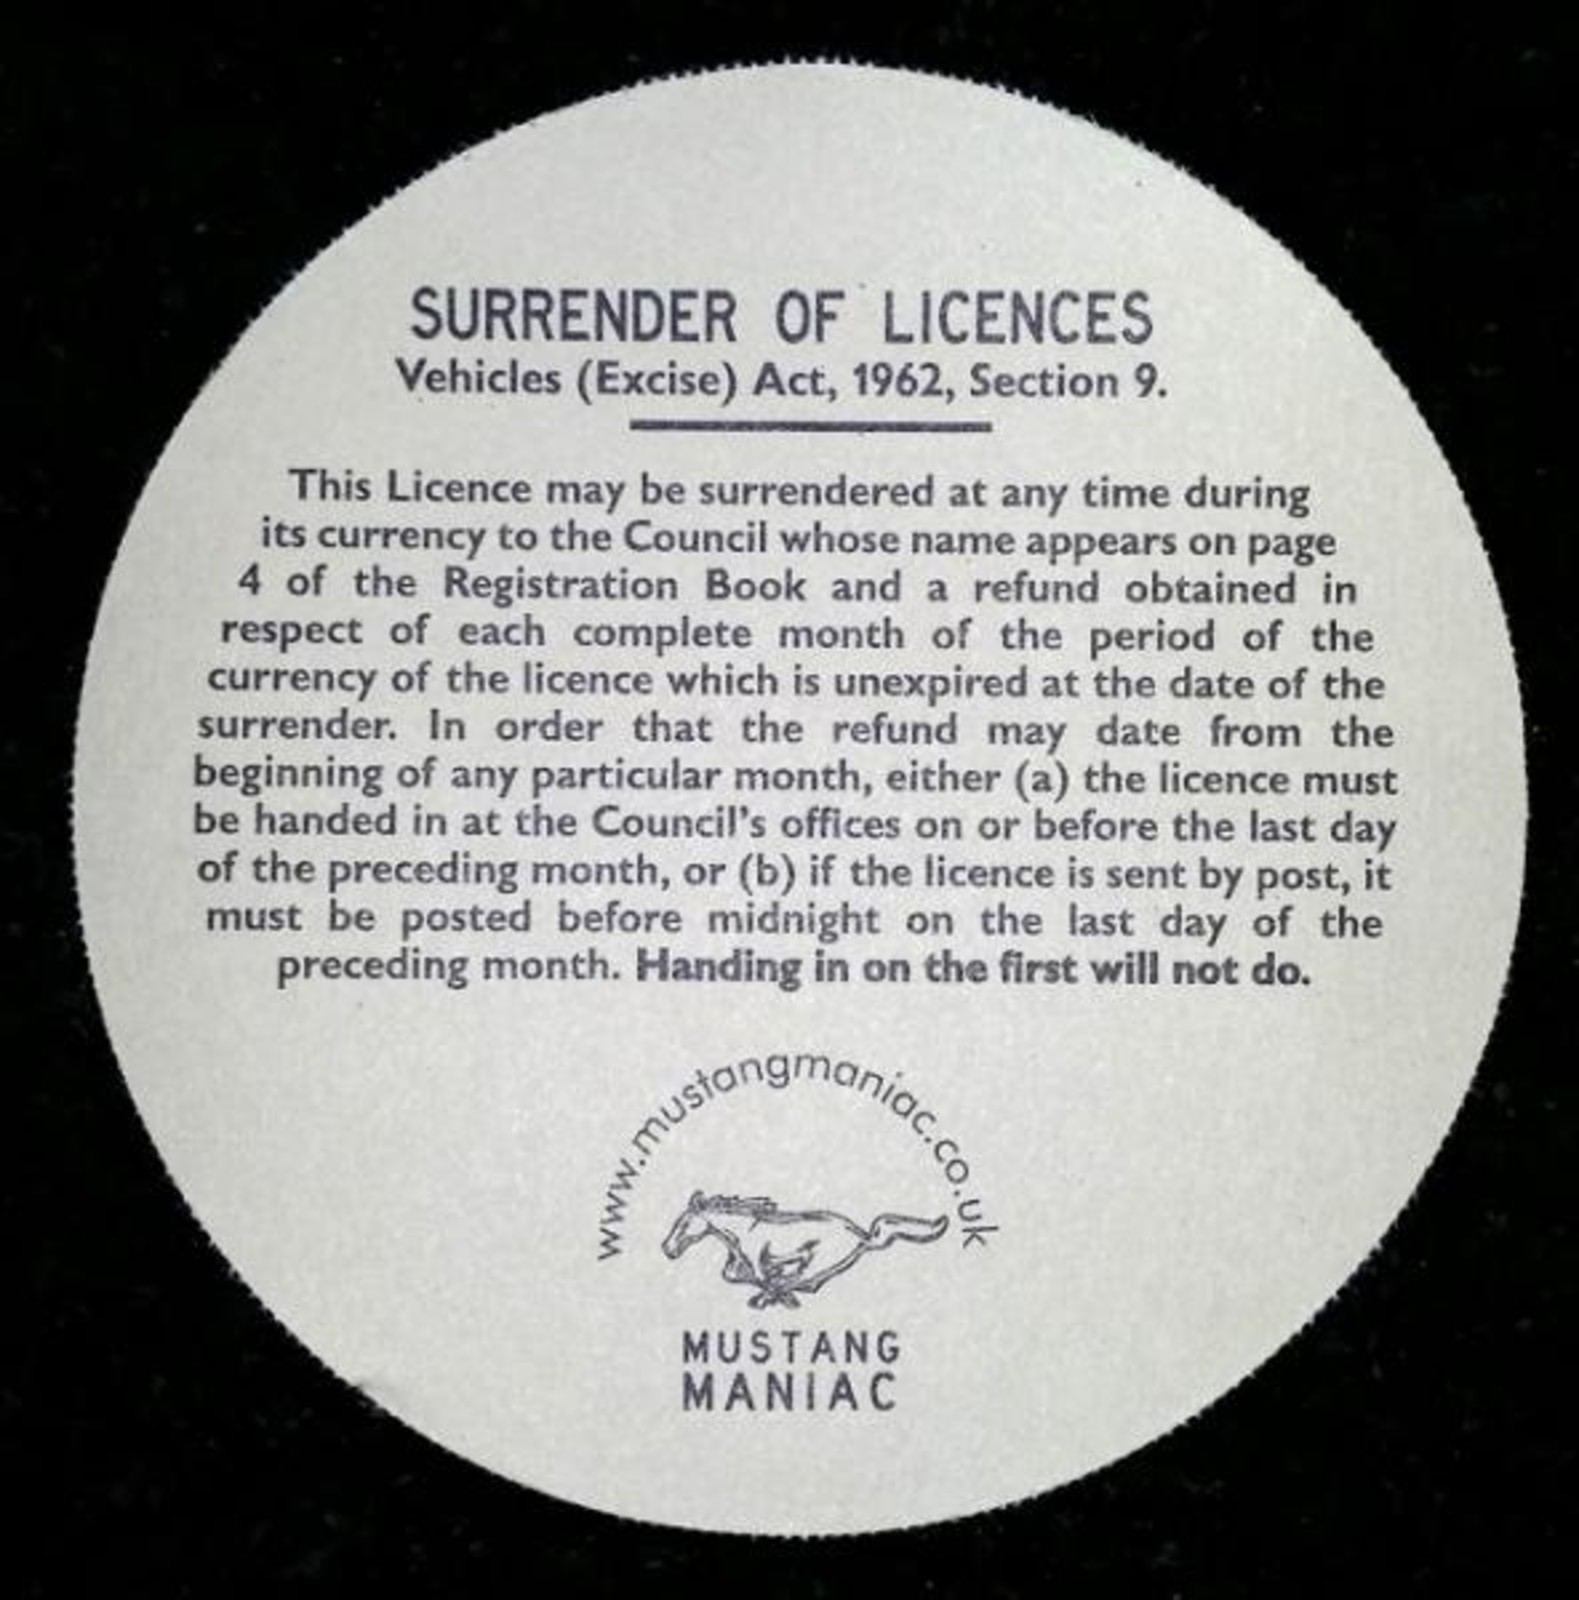 April 68 Mustang Stamp Tax Disc